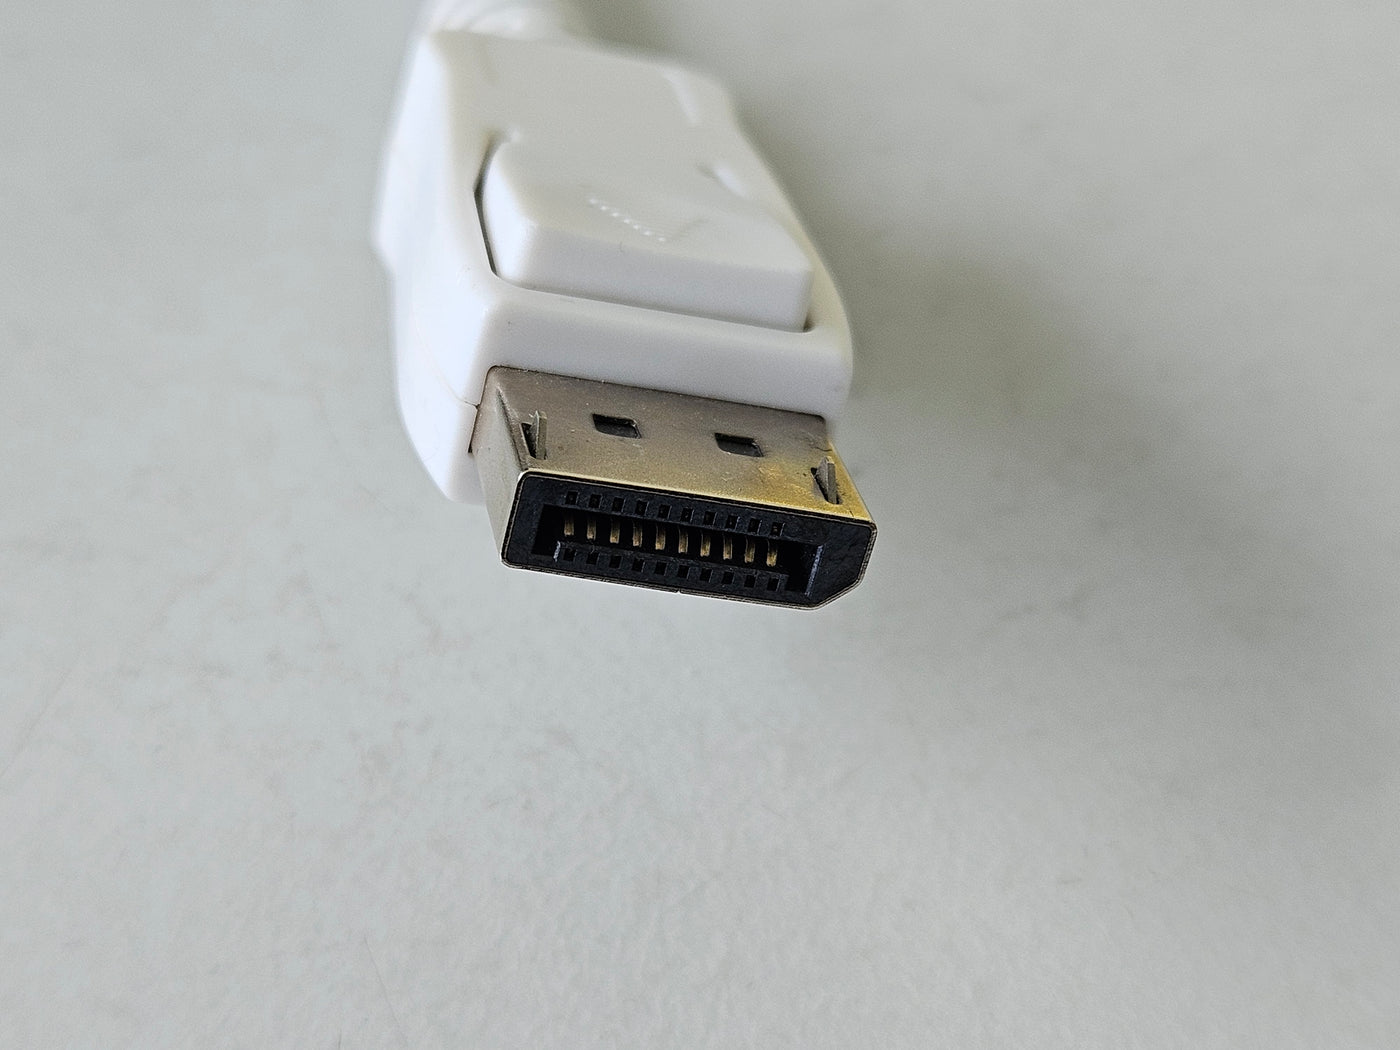 Generic DisplayPort to VGA Adapter - White USED